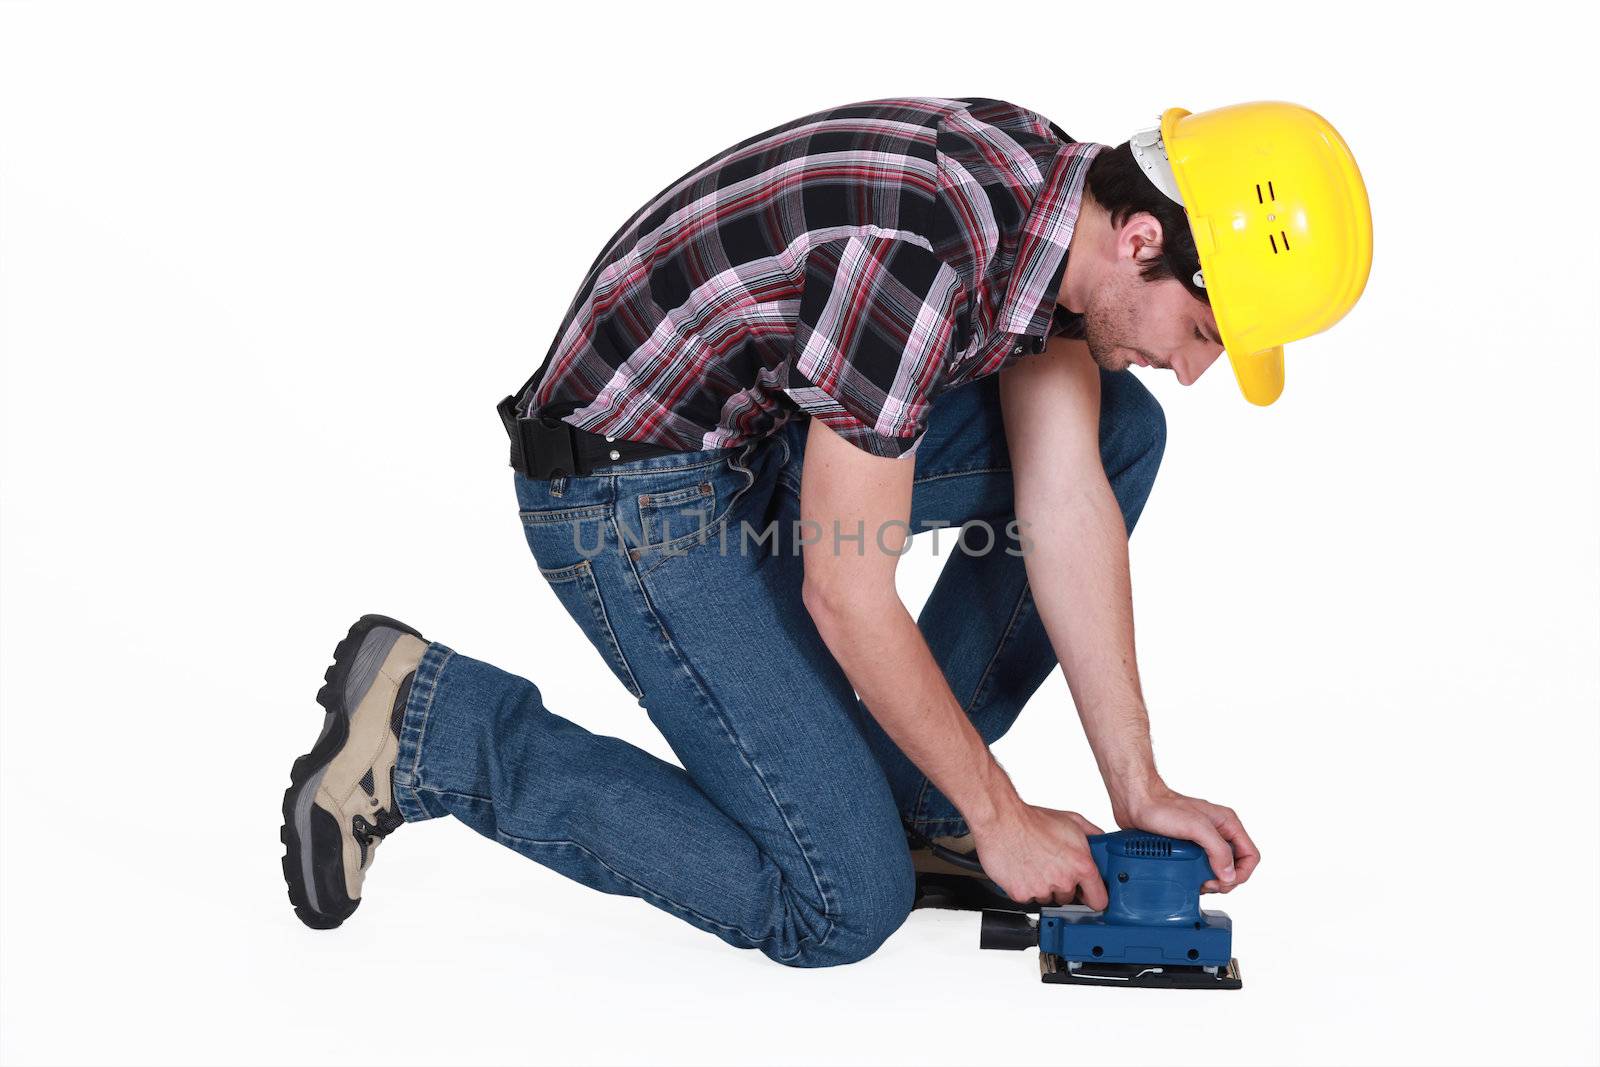 Workman using an electric sander